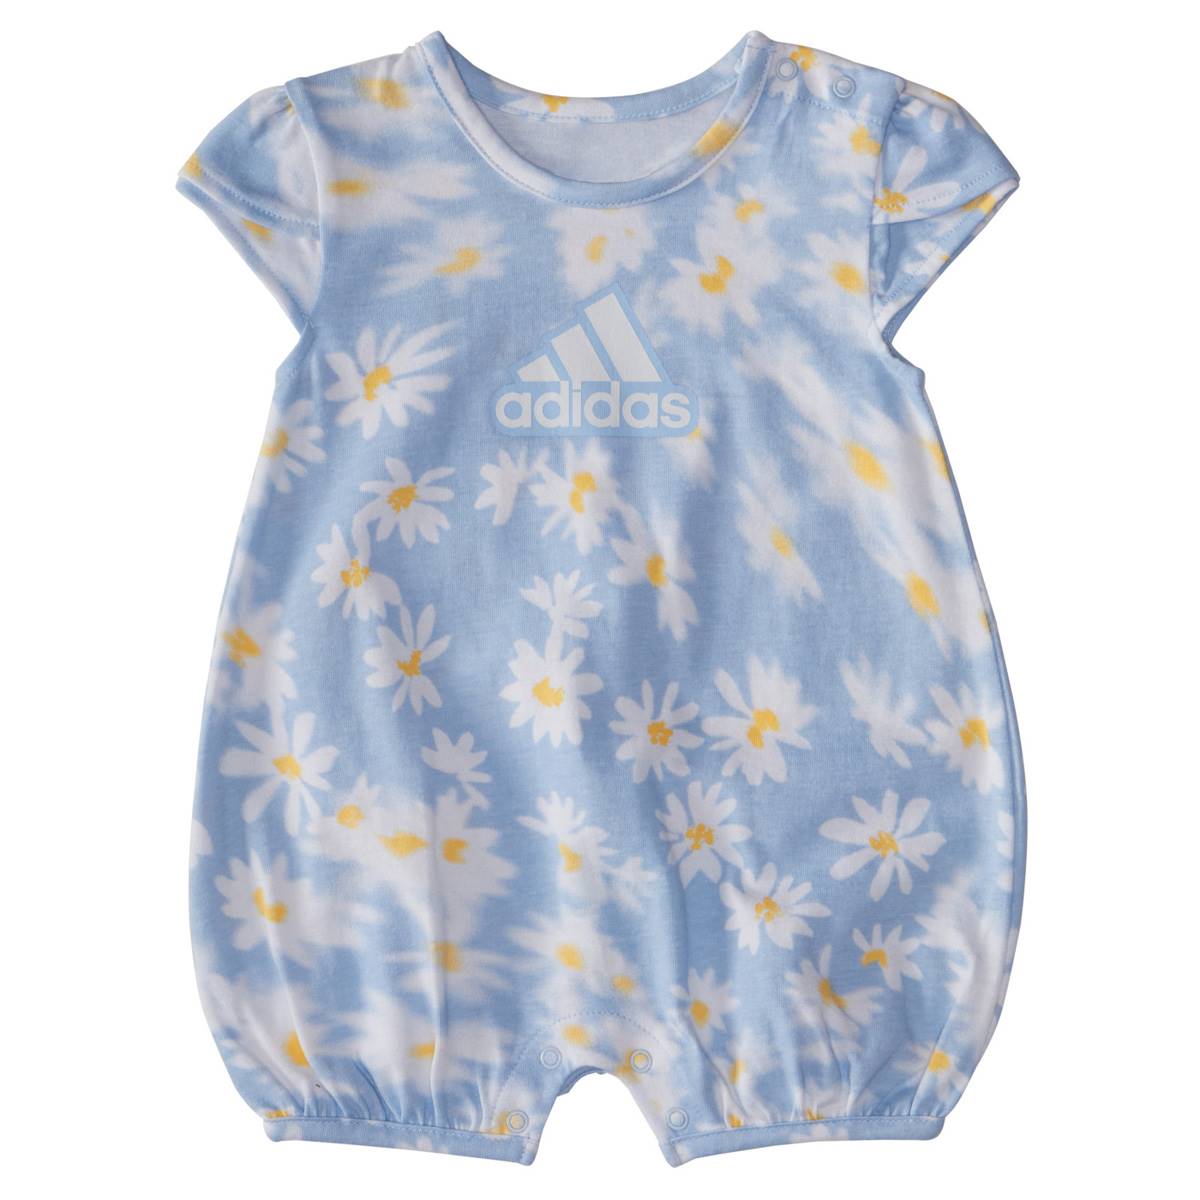 Baby Girl (12-24M) Adidas(R) Dizzy Floral Romper